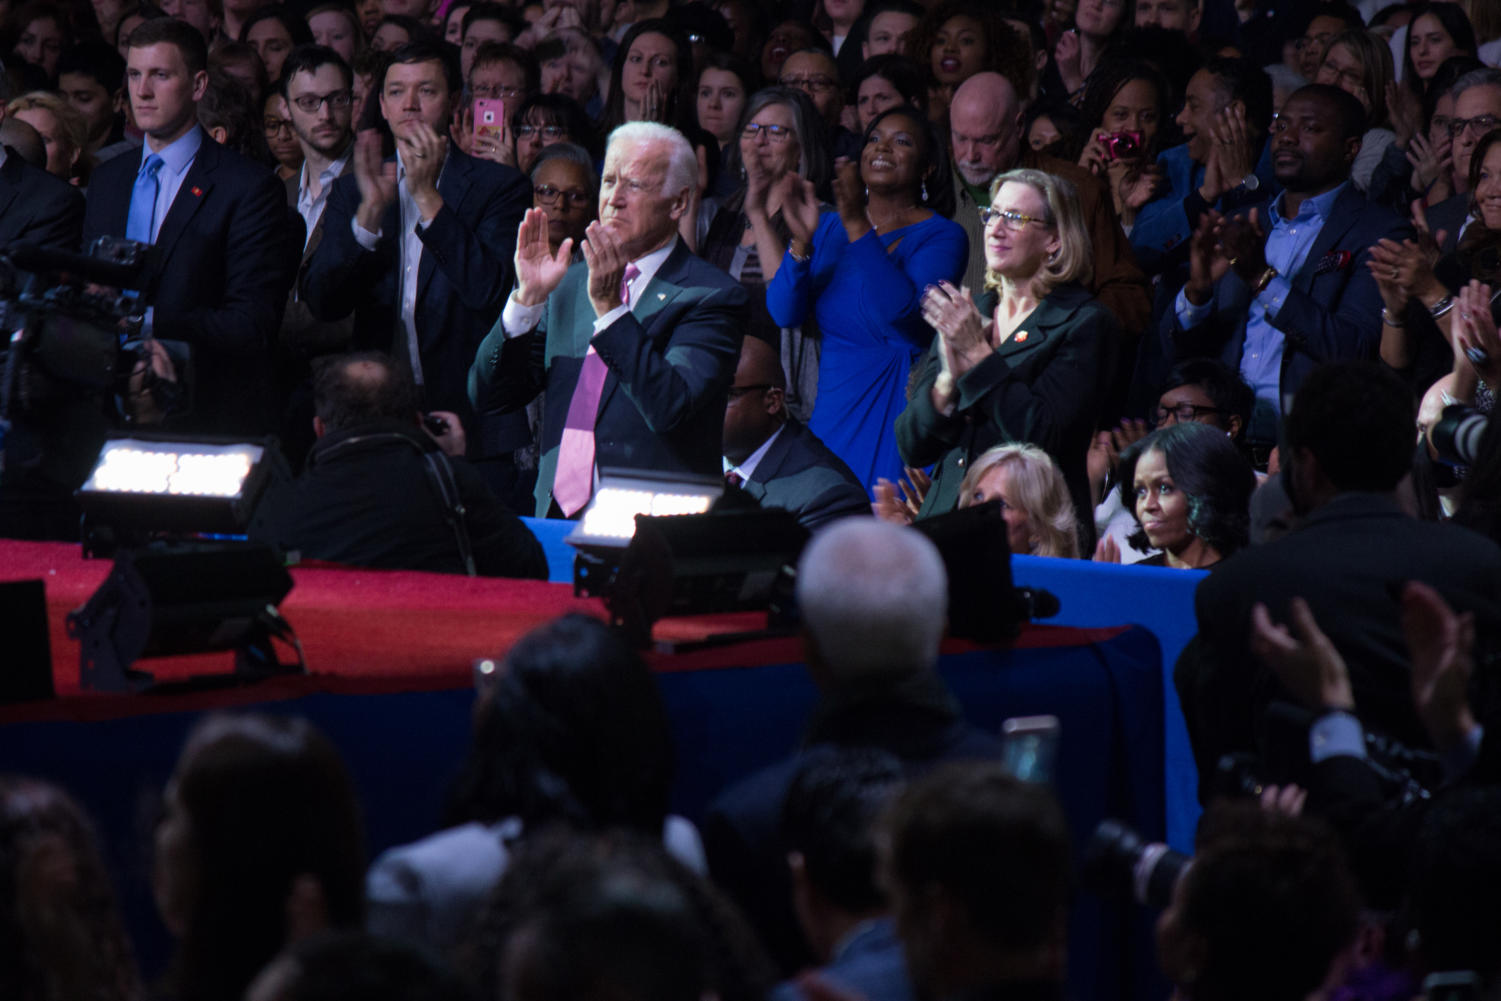 Vice President Joe Biden rises with the crowd to applaud Obama.